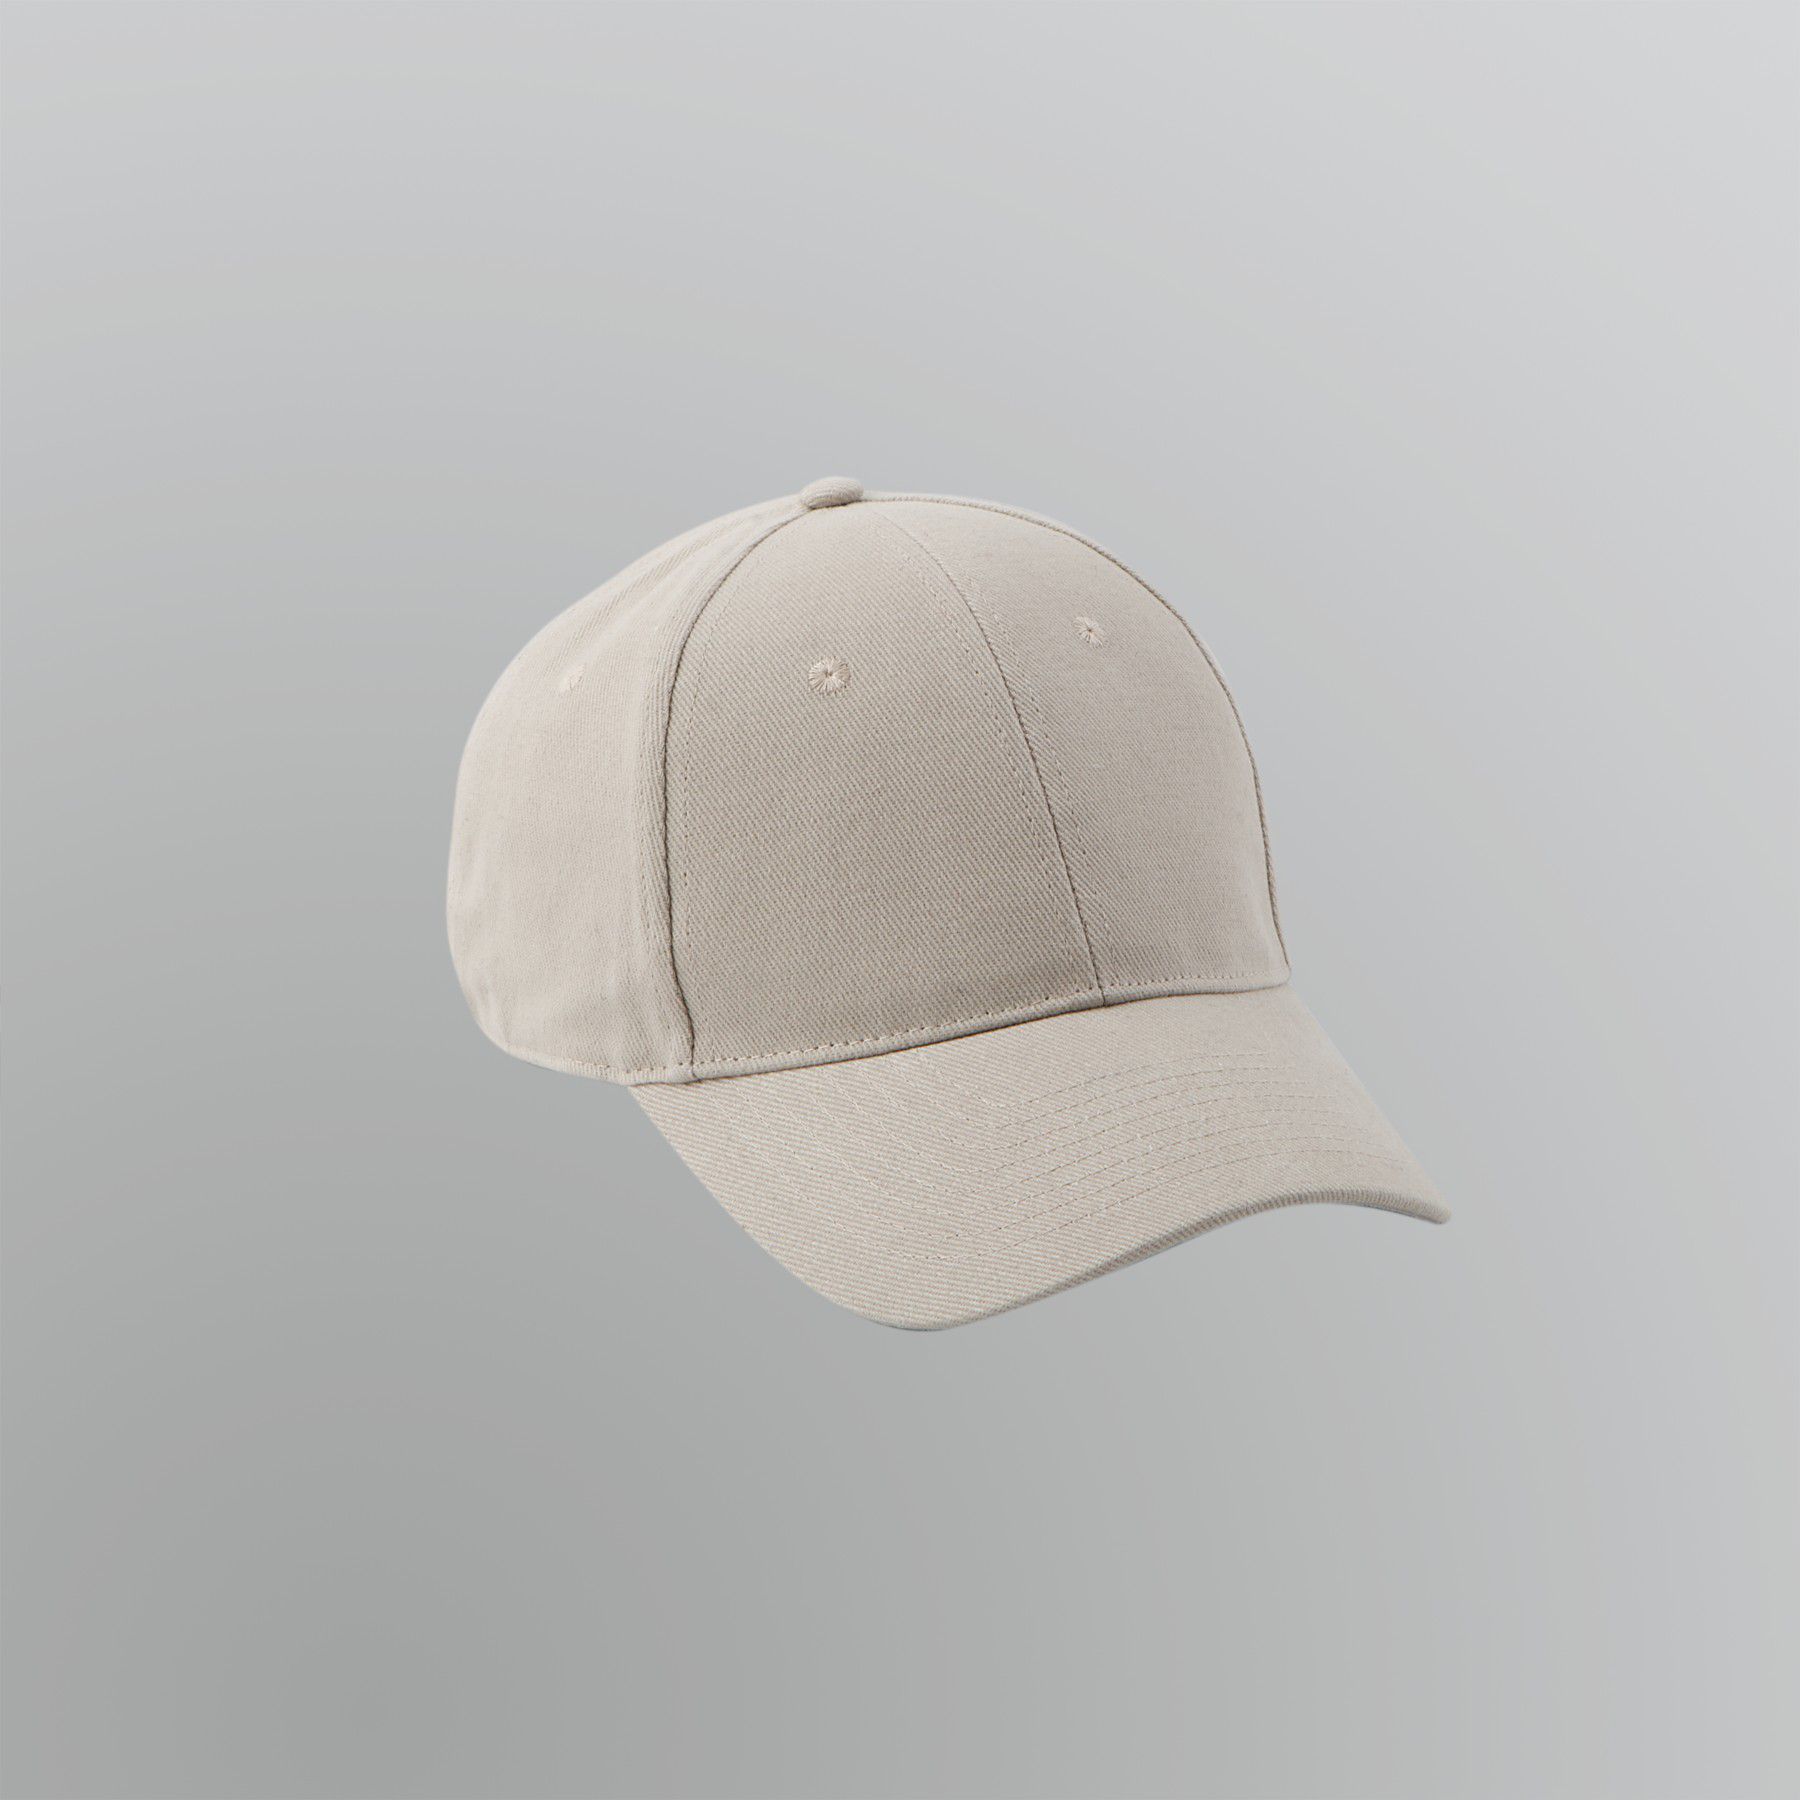 Basic Editions Men's Baseball Hat